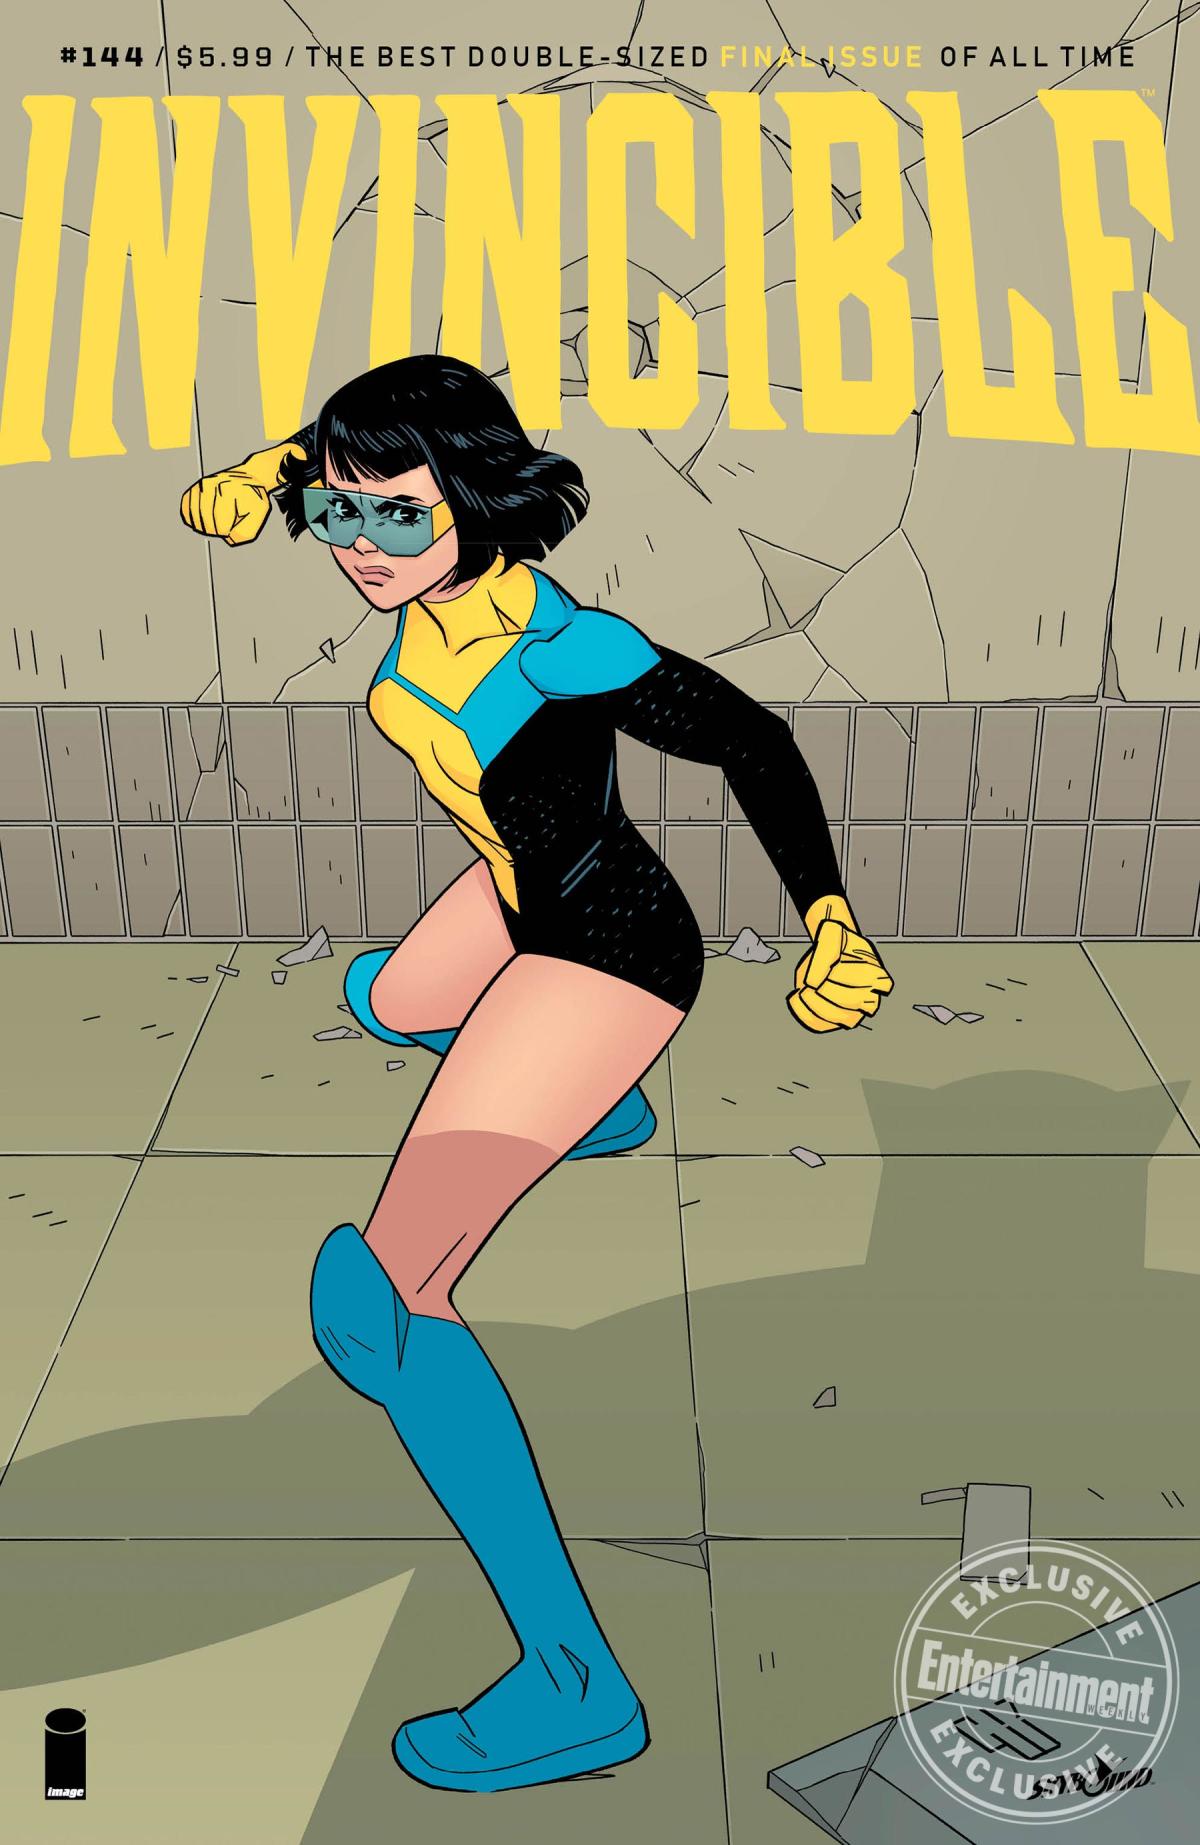 s animated superhero series Invincible features superstar